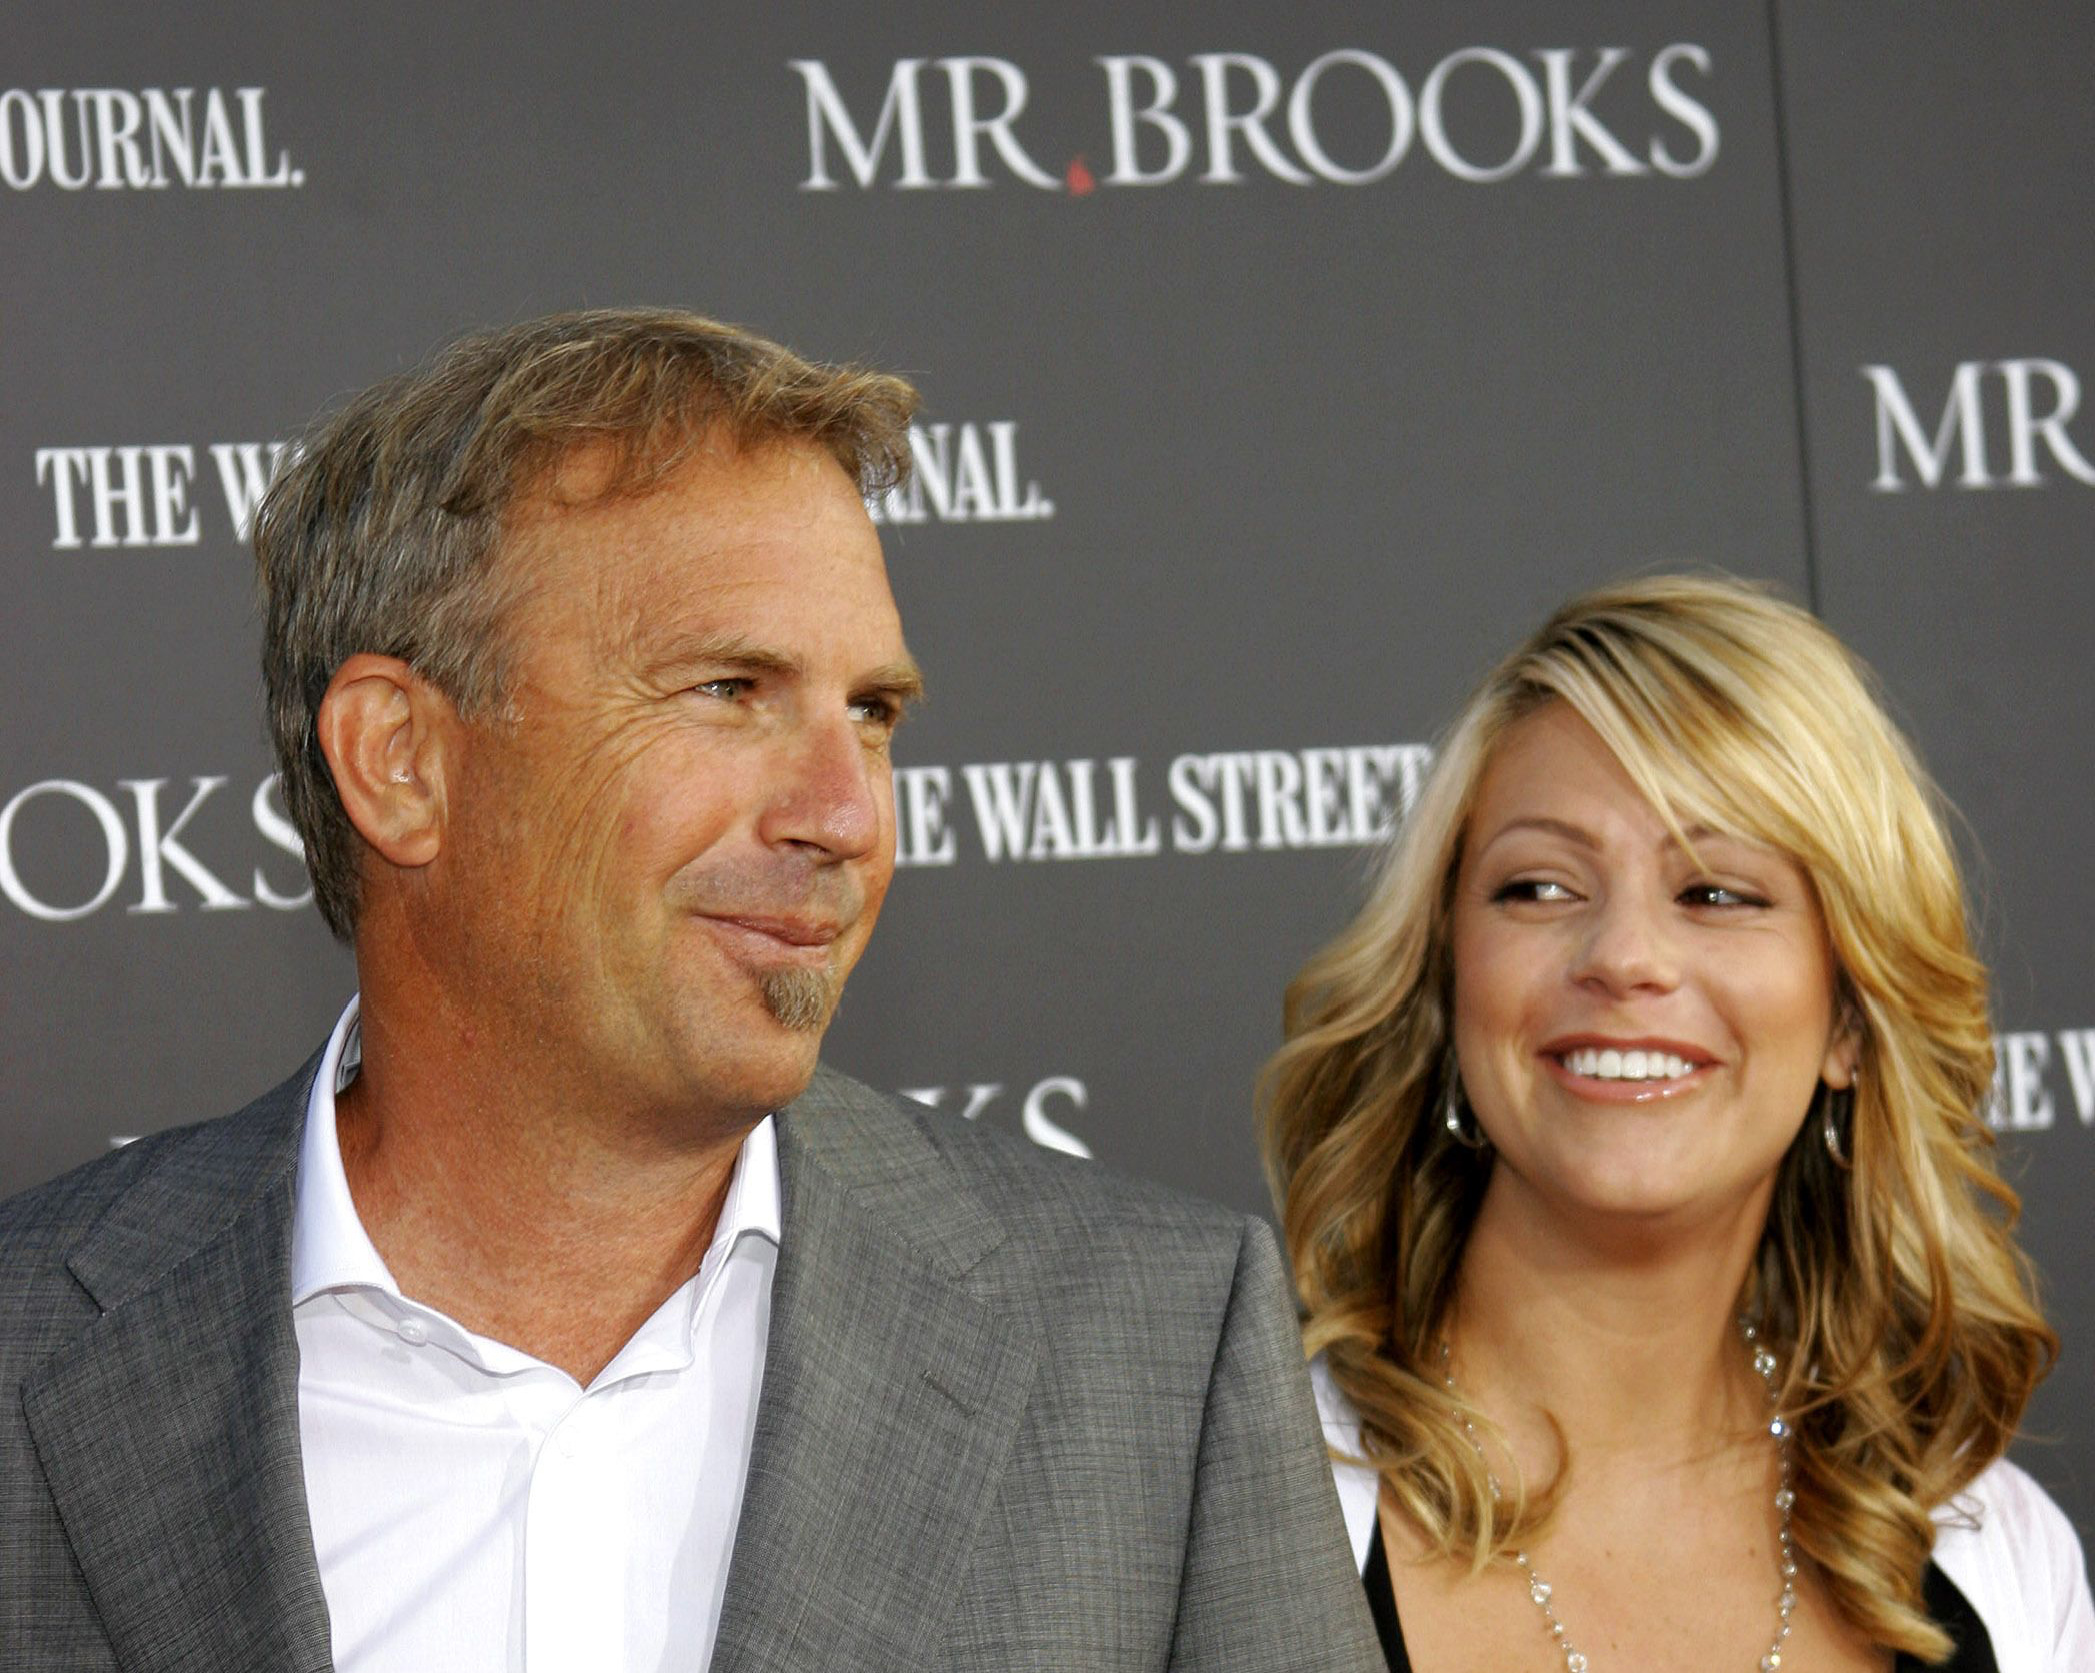 Kevin Costner Still Has “Love” For Estranged Wife Despite Messy Divorce Battle